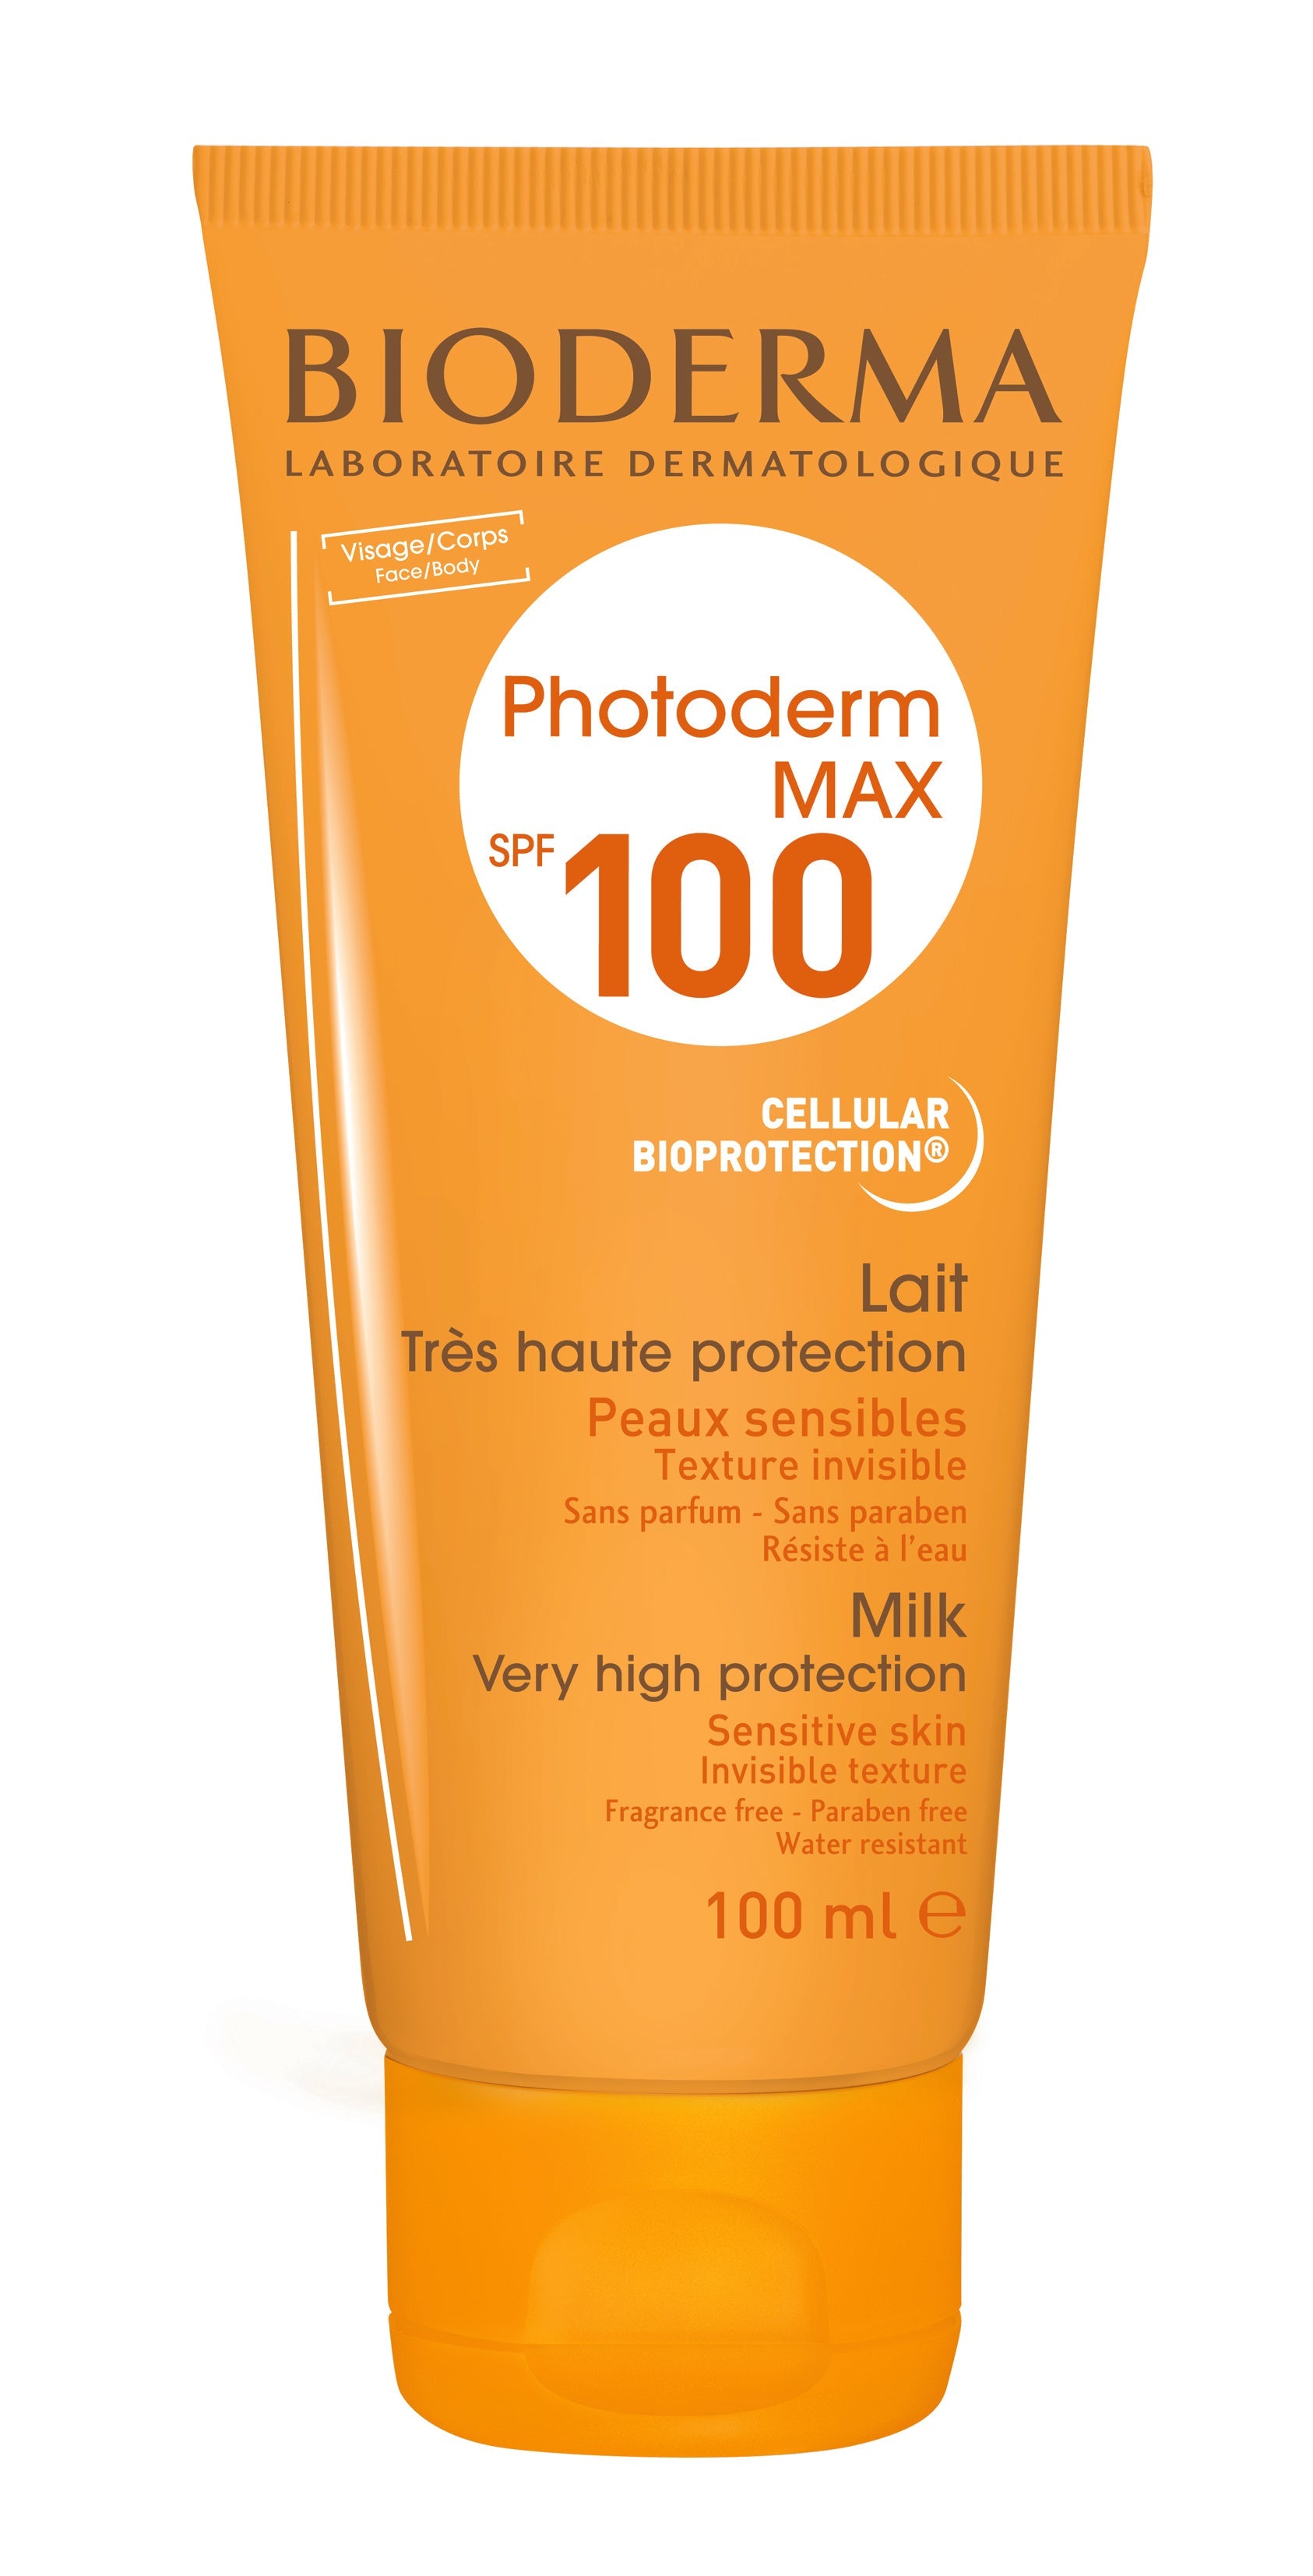 Bioderma Photoderm MAX Milk for SPF100 for Sensitive Skin 100ml